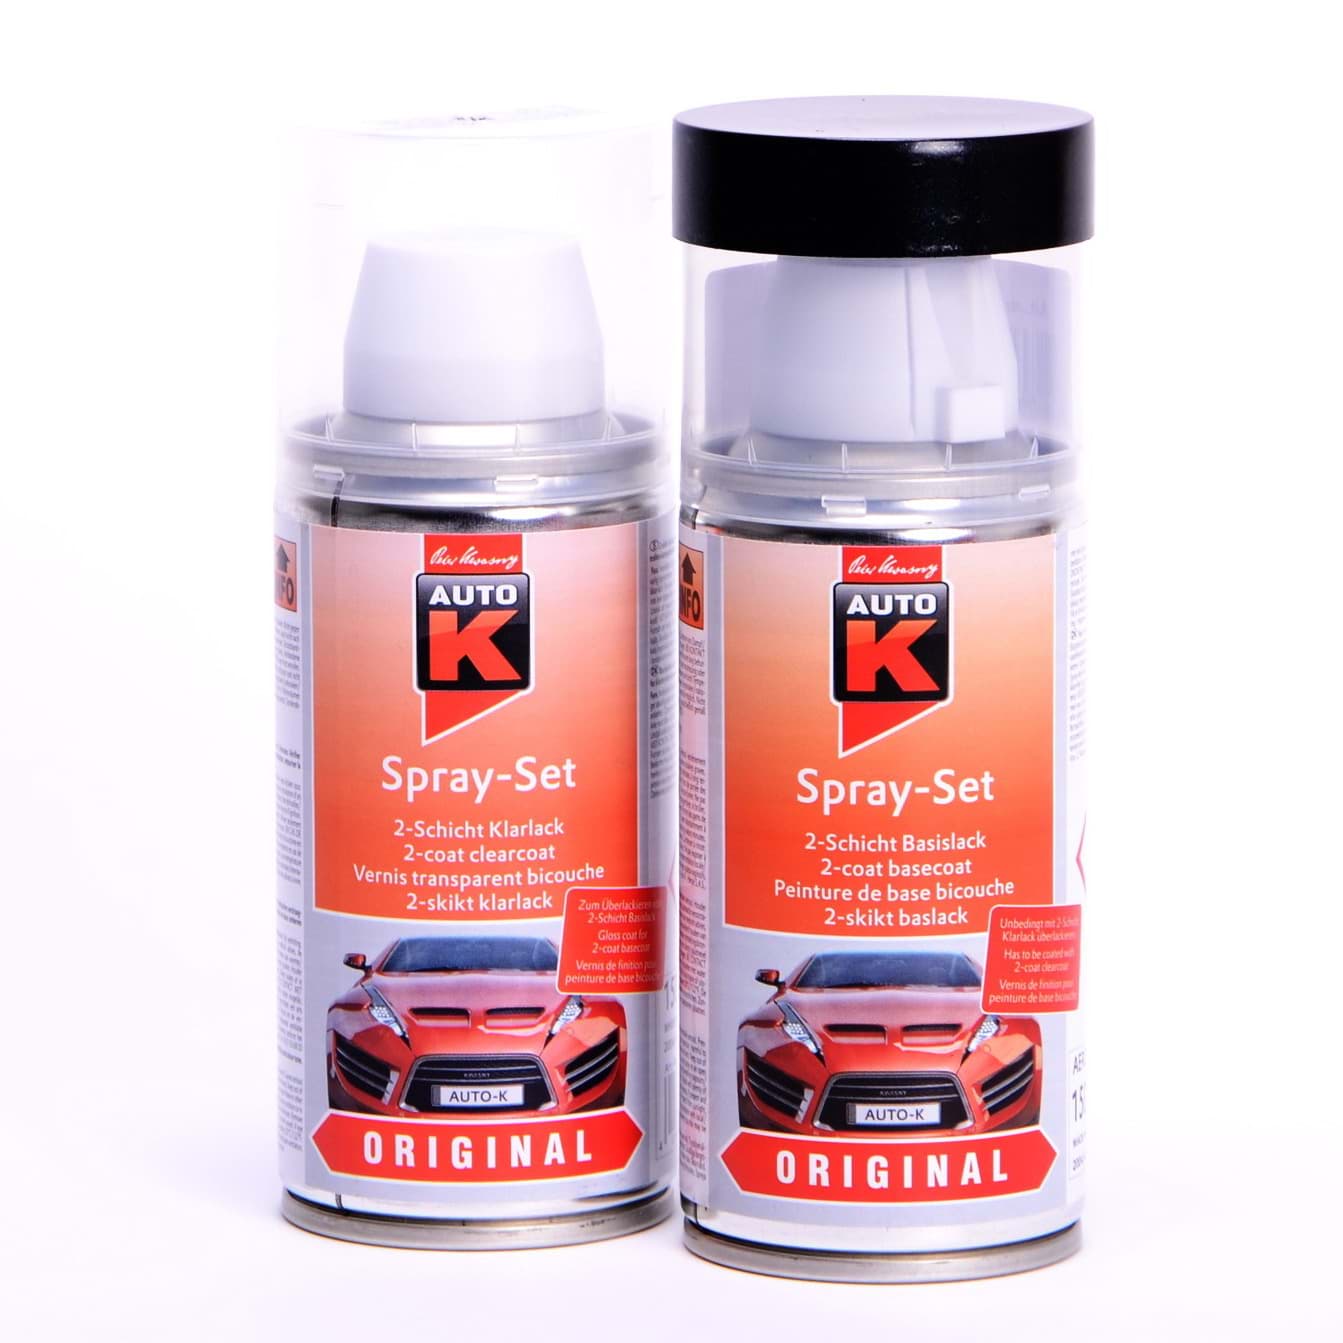 Auto-K Spray-Set Autolack für Renault 630 Gris Xerus met 43396 resmi